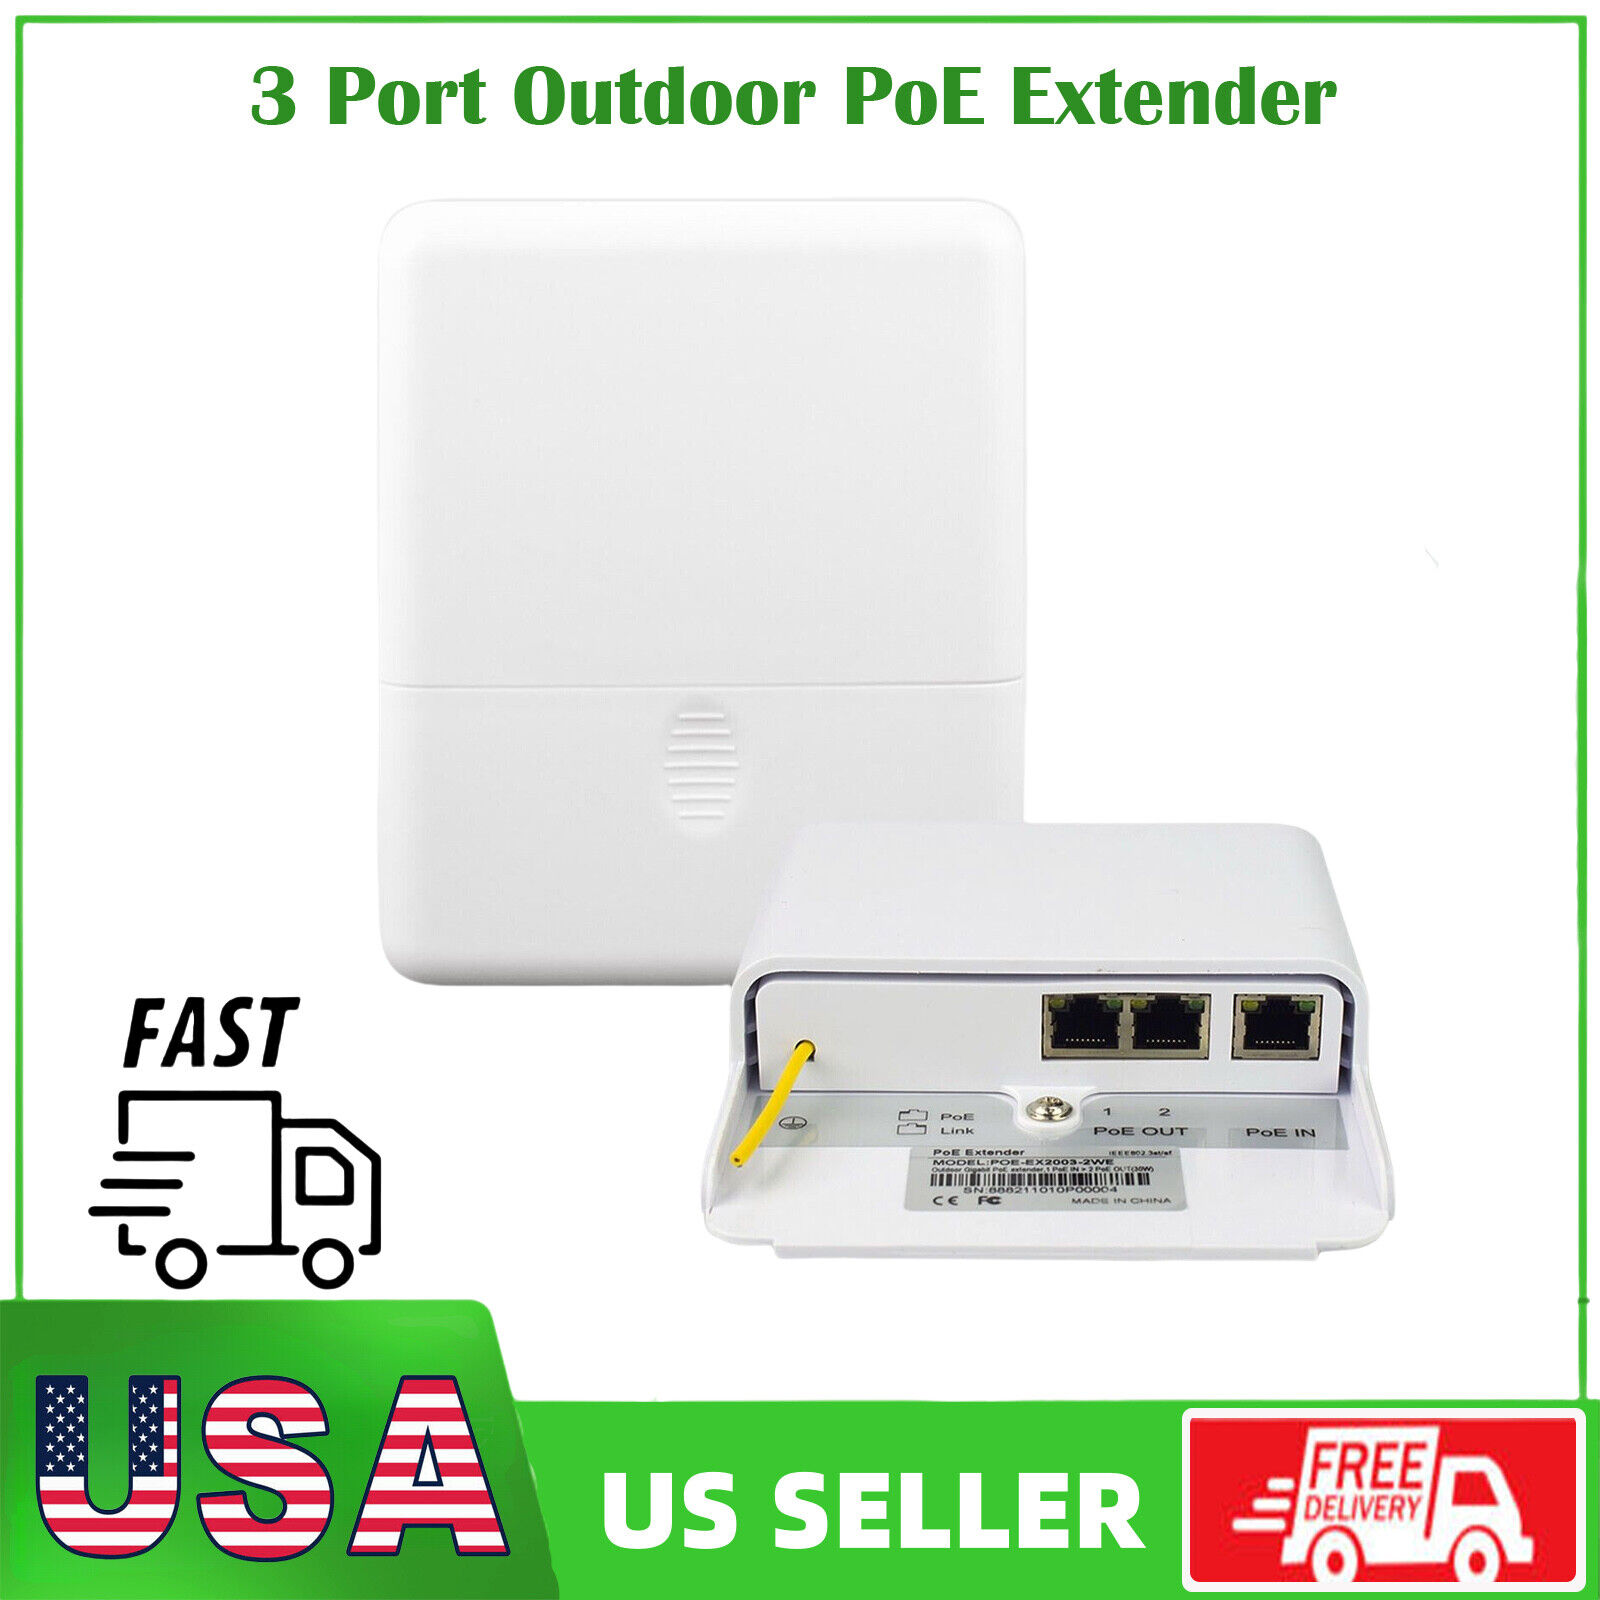 3 Port Gigabit Outdoor POE Extender rainproof Up to 100m IEEE 802.3af/at